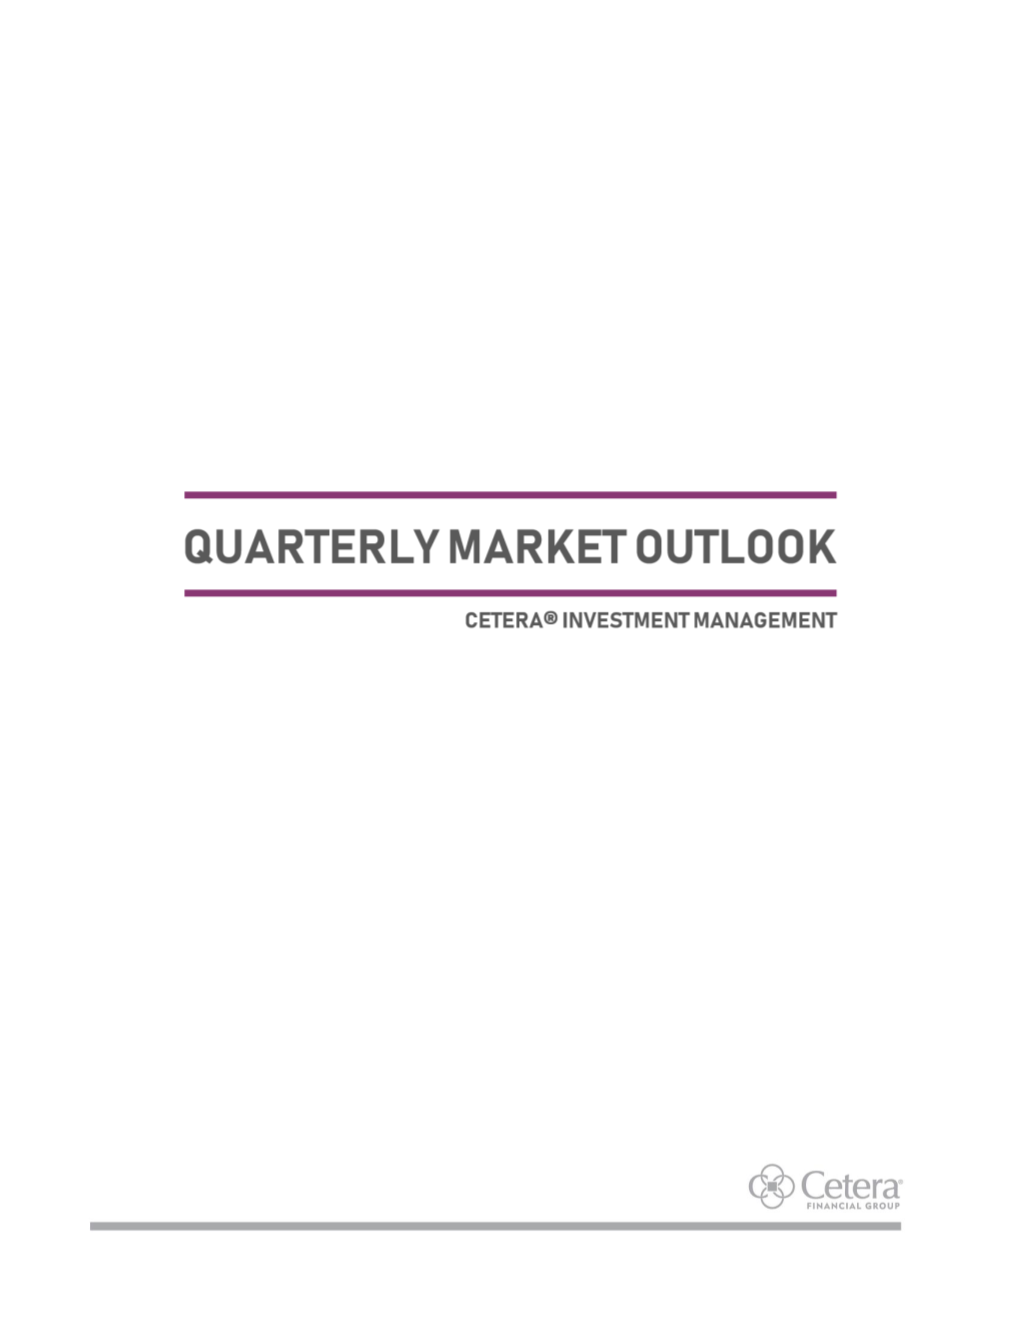 CIM Quarterly Market Outlook Q4 2020.Pdf